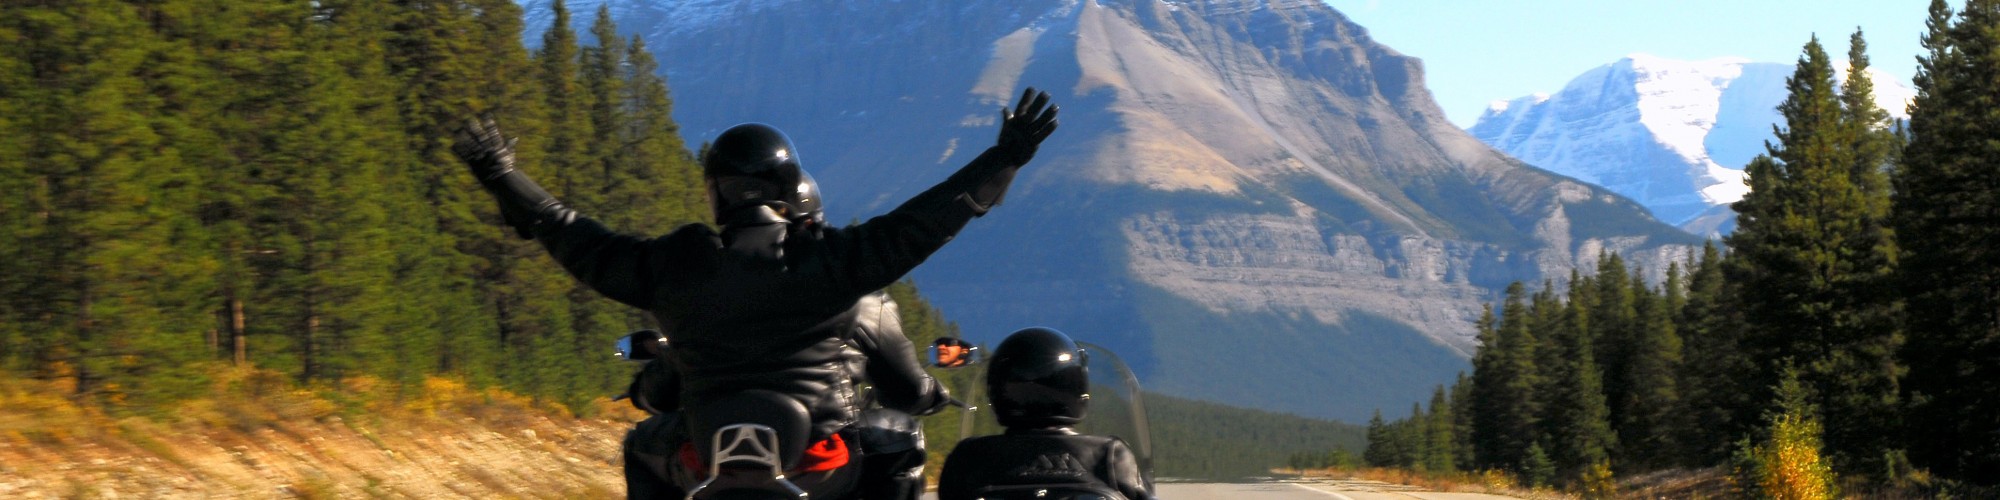 Motorcycle touring in Jasper National Park, Alberta, Canada.